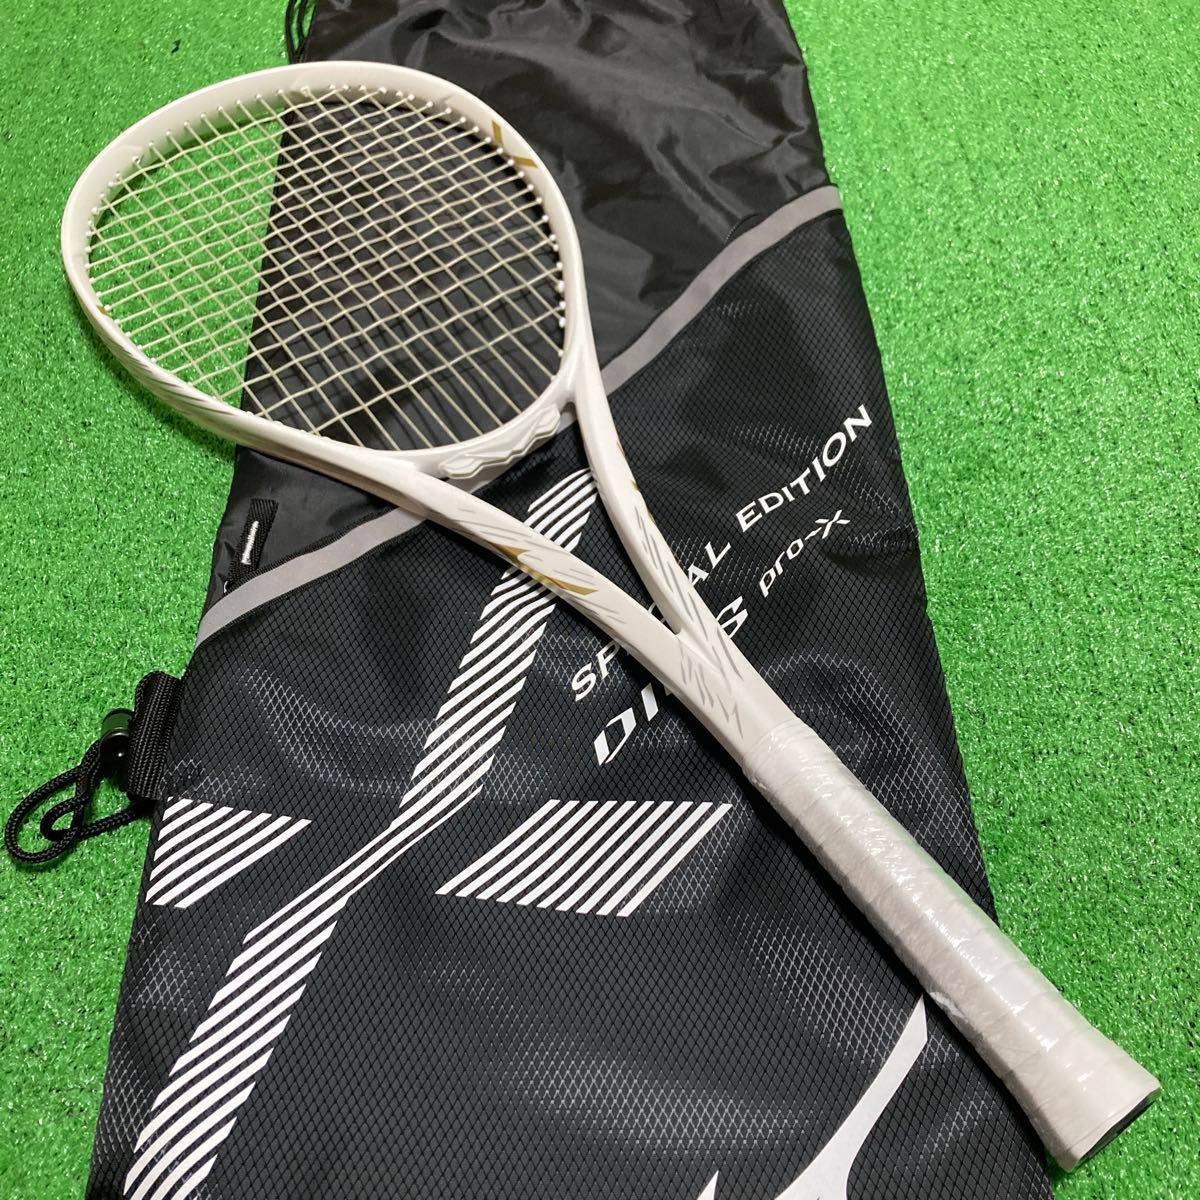 DIOSpro-X true black ディオスプロエックス 数量限定カラー 軟式テニスラケット ソフトテニスラケット 